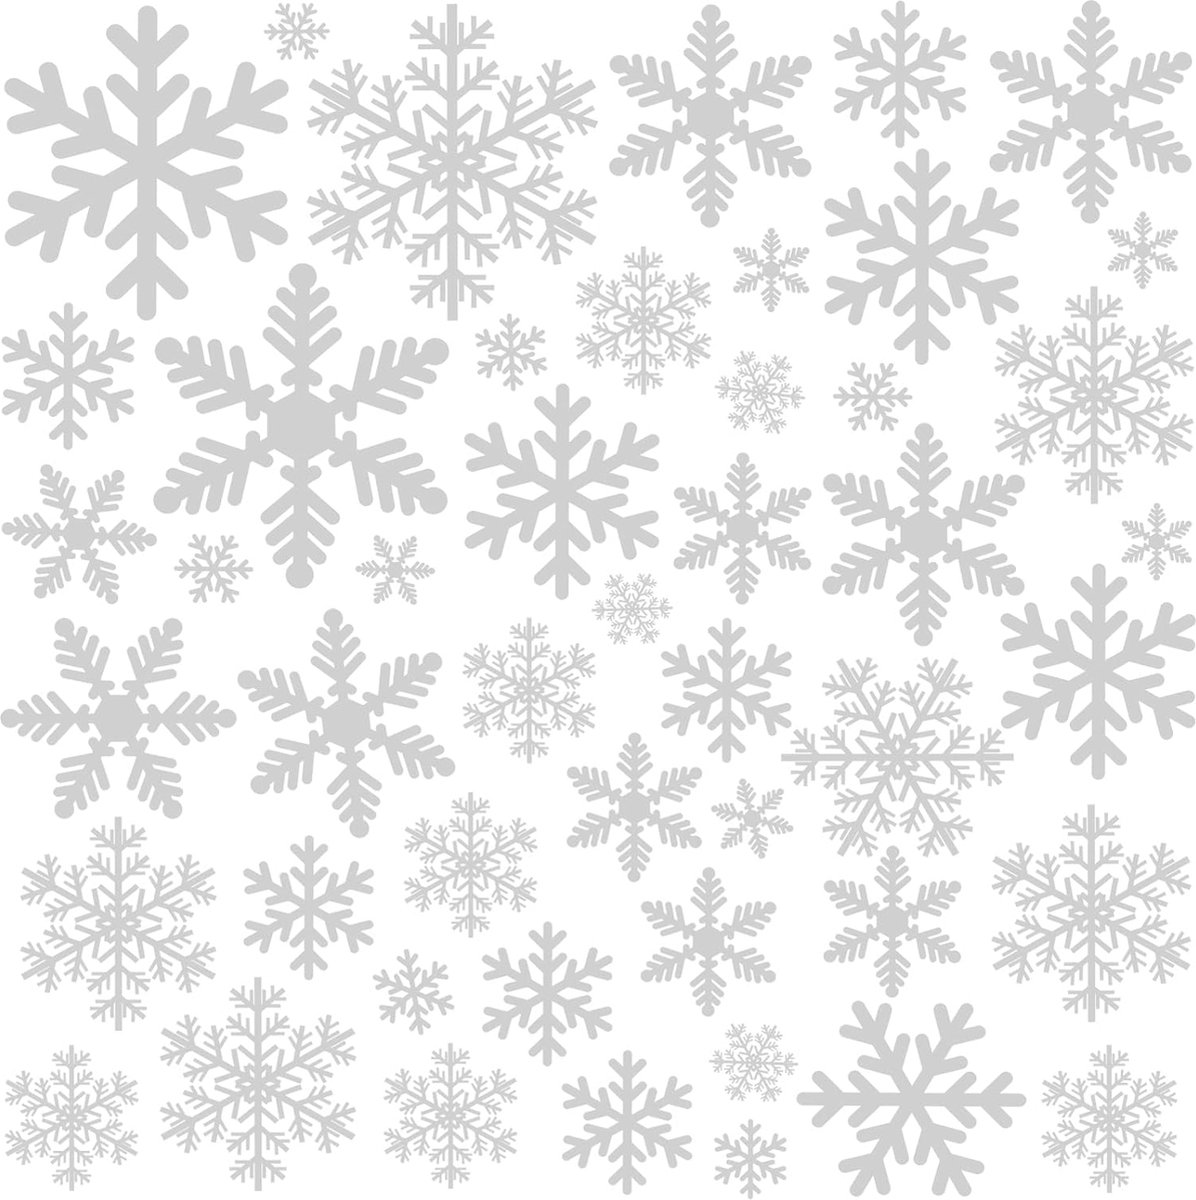 Raamstickers sneeuwvlokken wit - 156 stuks - Zelfklevend - Kerstmis/winter raamfolie